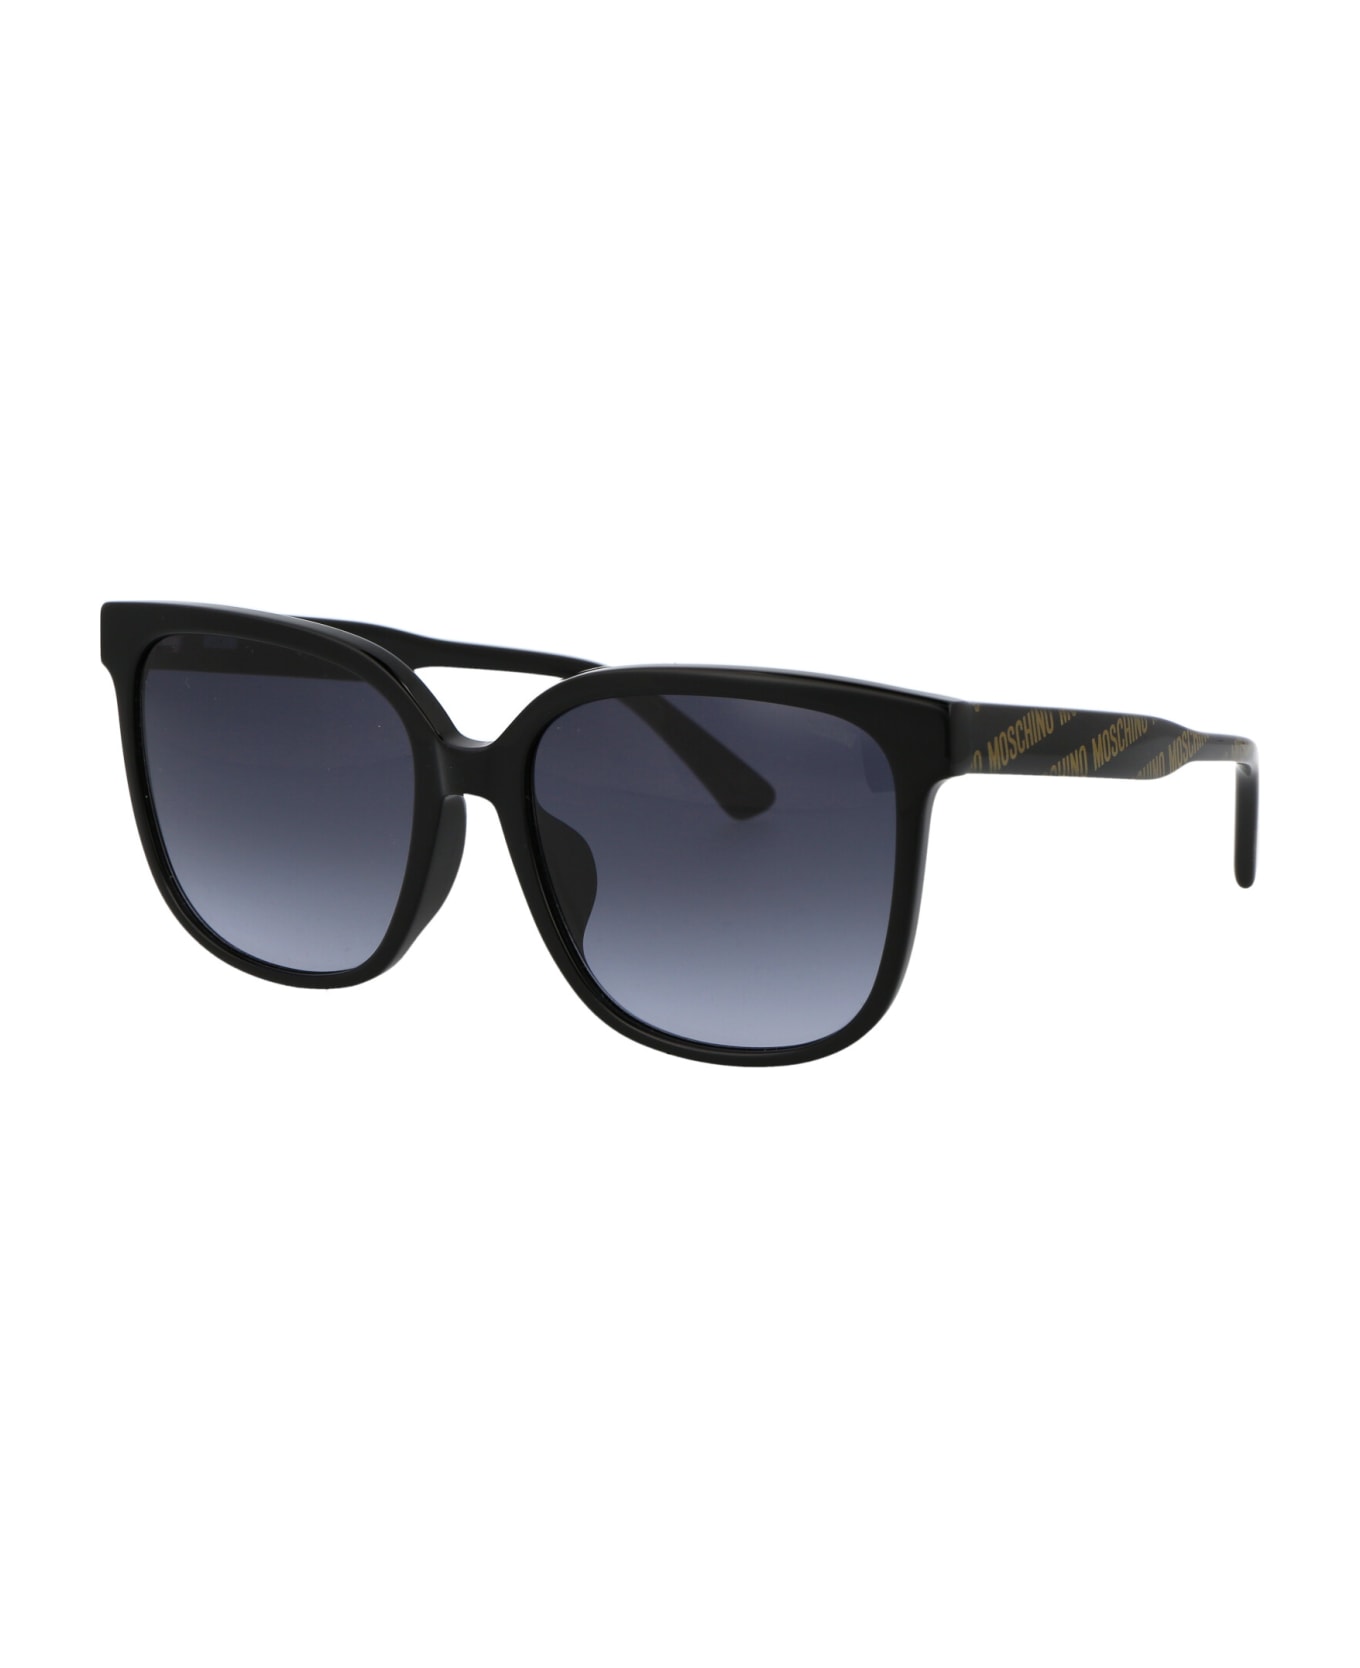 Moschino Eyewear Mos134/f/s Sunglasses - 7RM9O BLACK